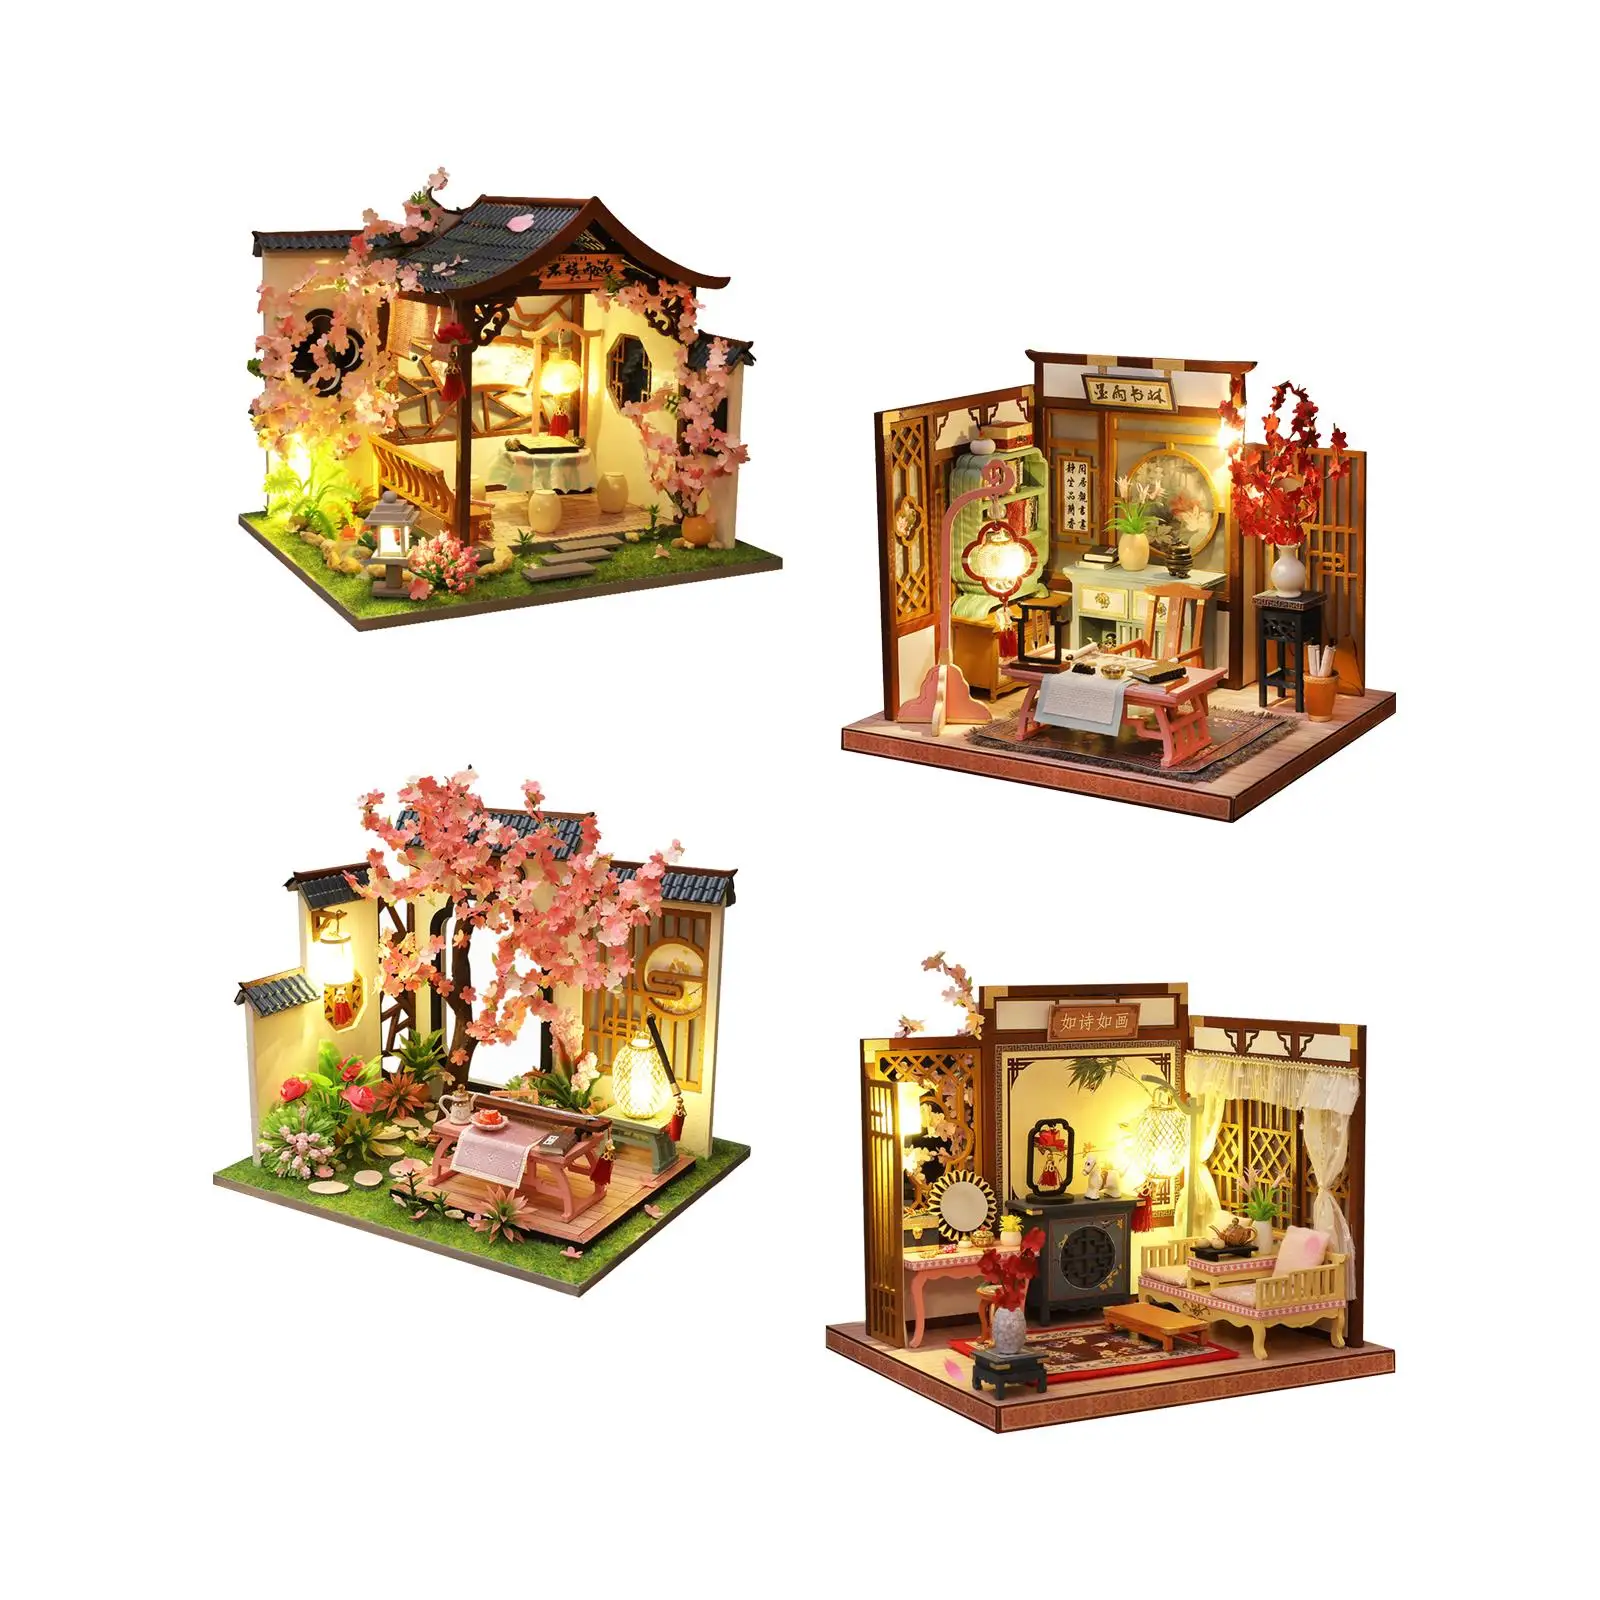 Wooden Miniature Dollhouse DIY Kits Model House Kits Creative Room Mini House Kits for Boys Teens Toddlers Kids Children